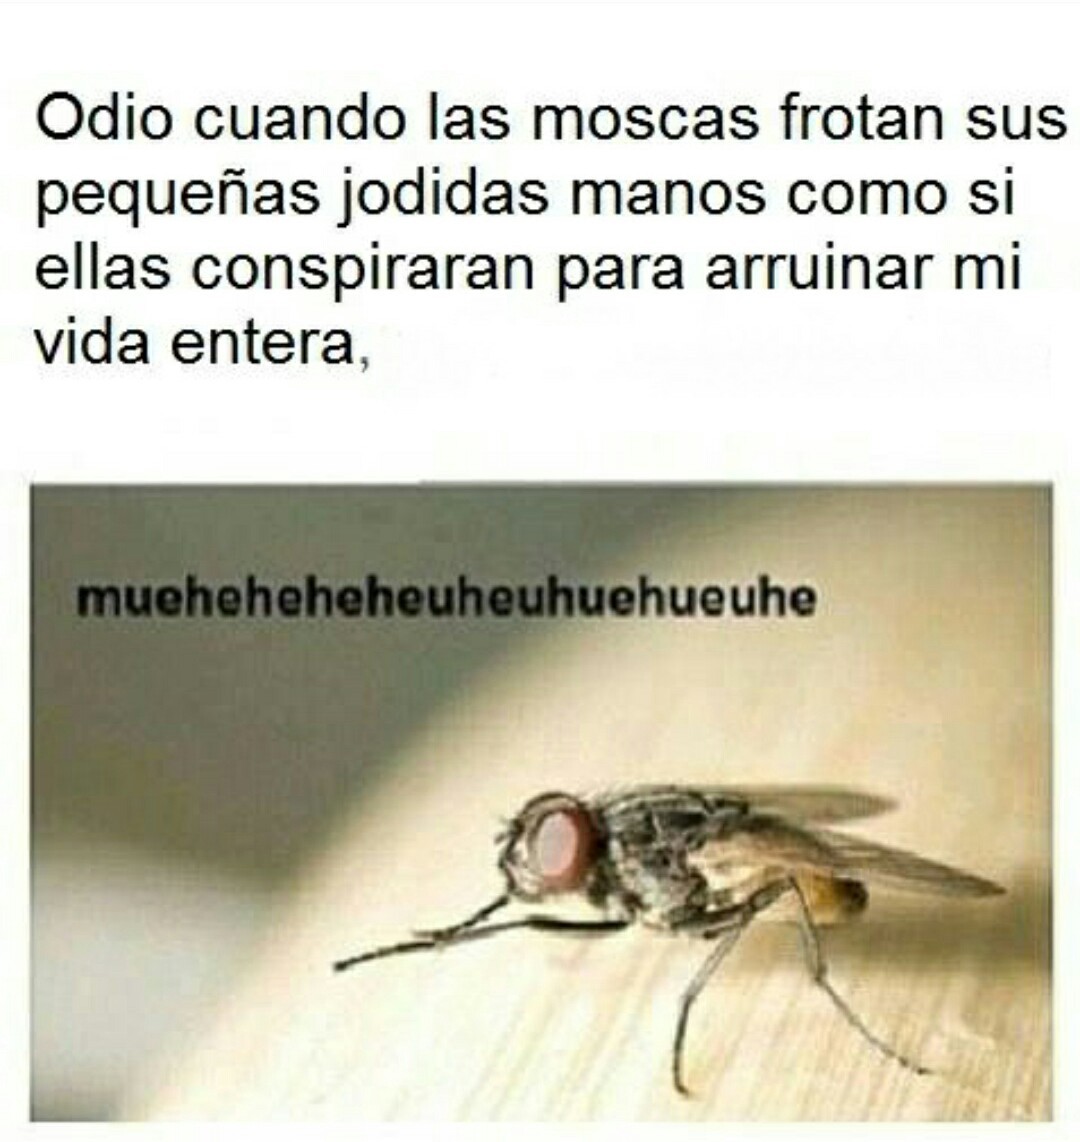 Malditas moscas - meme